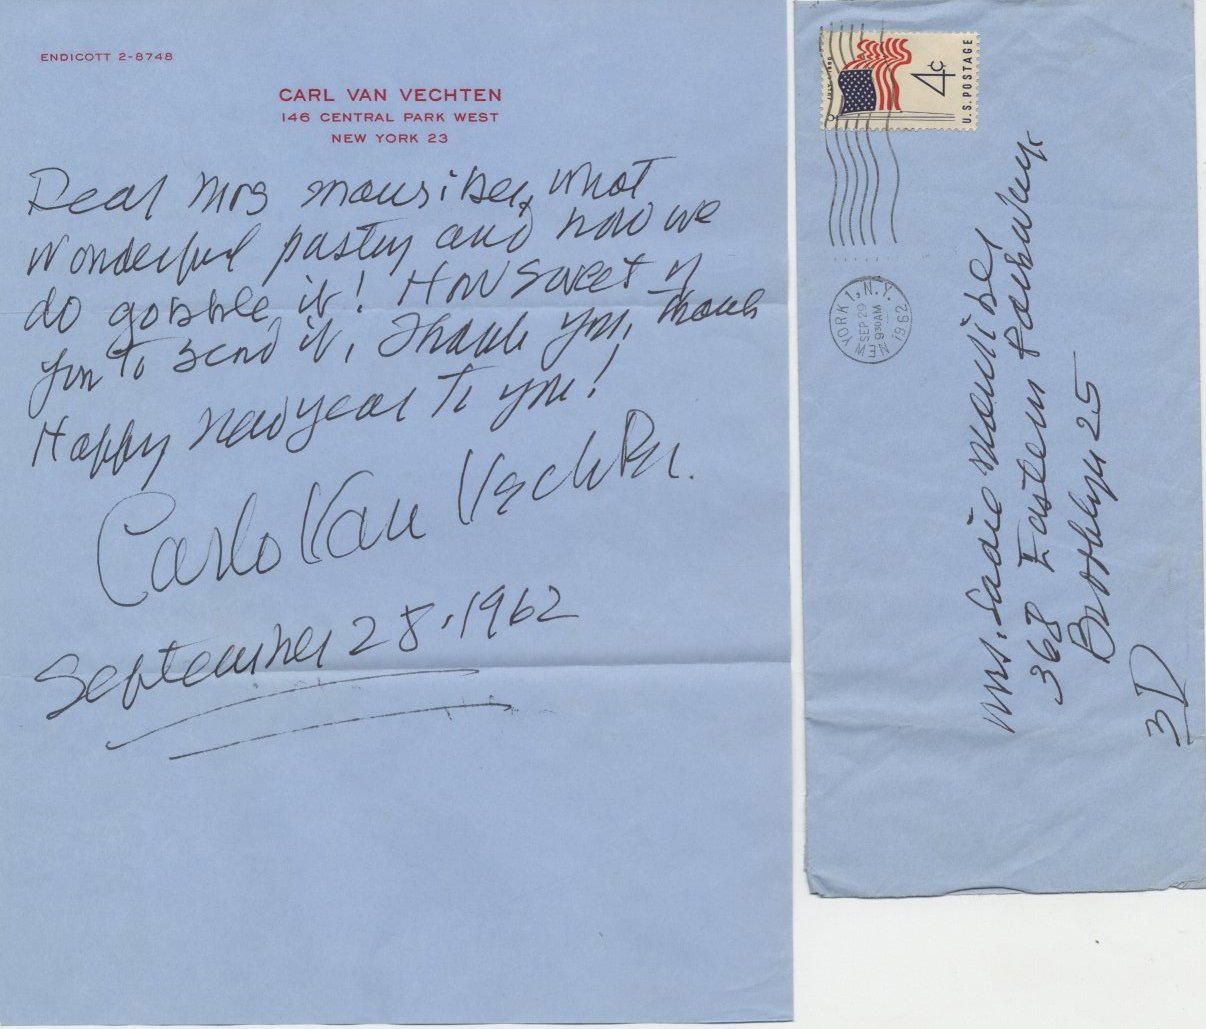 Photo Detail - Carl Van Vechten - Autographed letter signed by photographer Carl Van Vechten to Mrs. (Saul) Mauriber